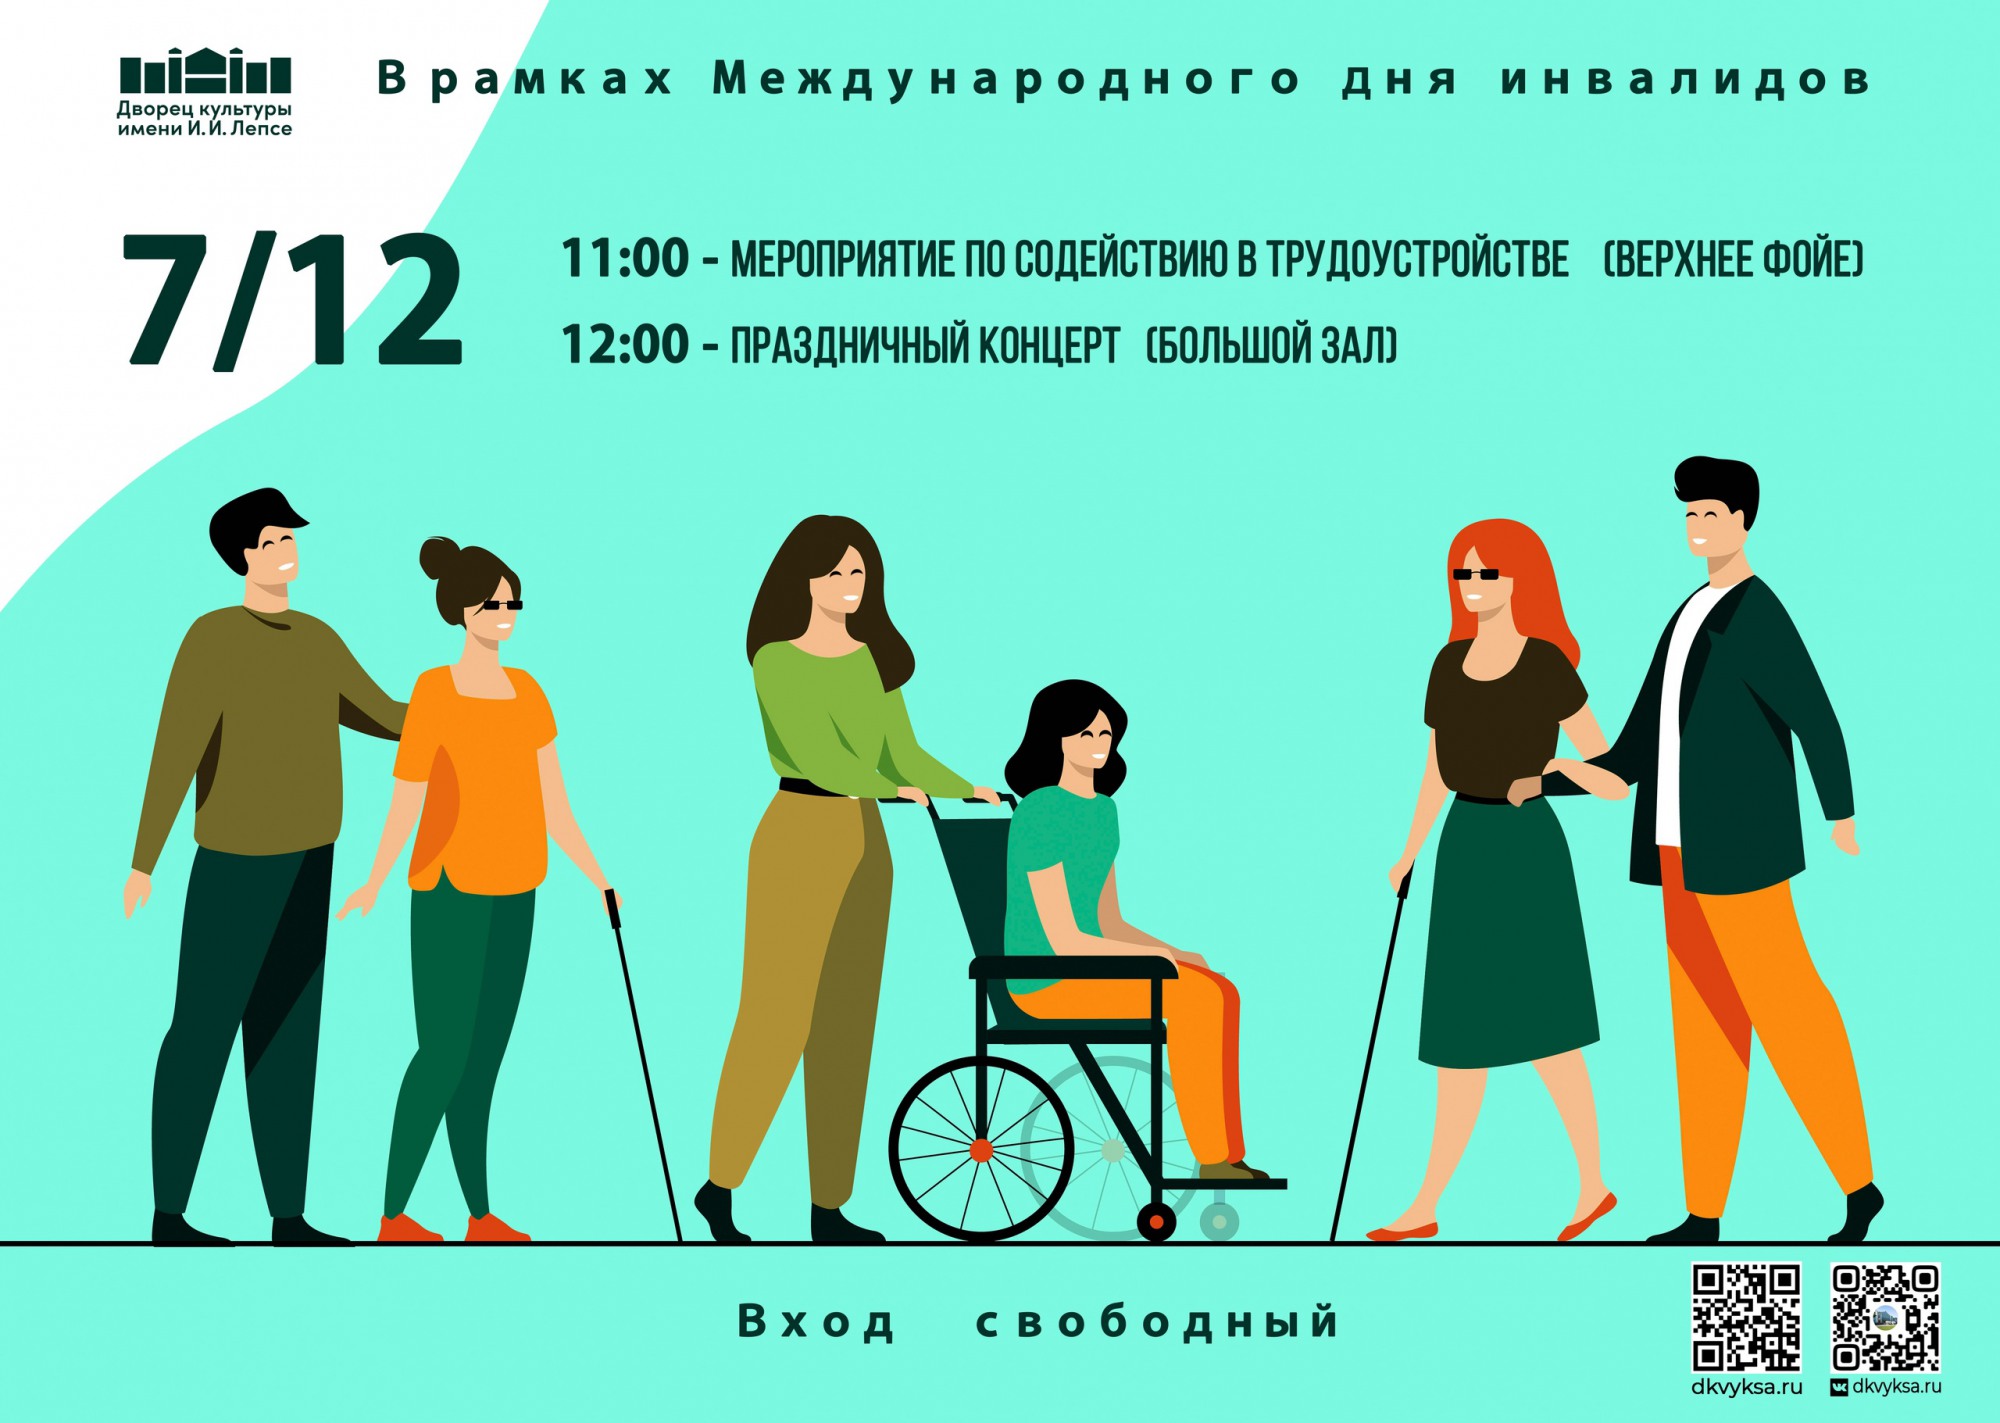 Празднование Международного дня инвалидов